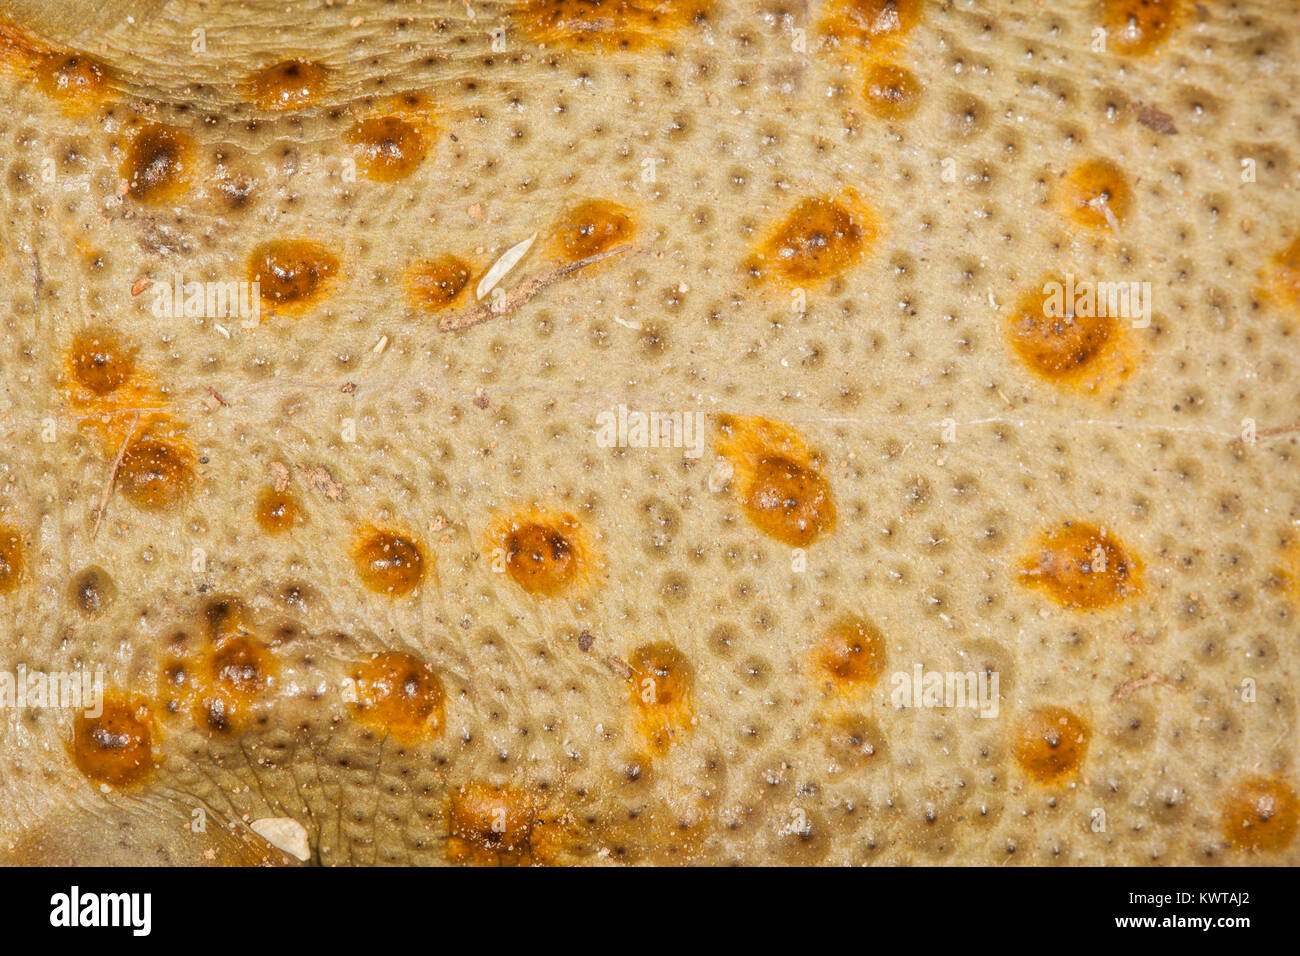 Gros plan sur la peau verruqueuse rugueux, d'un désert de Sonora (crapaud crapaud du Colorado), Incilius alvarius (Bufo alvarius). Banque D'Images